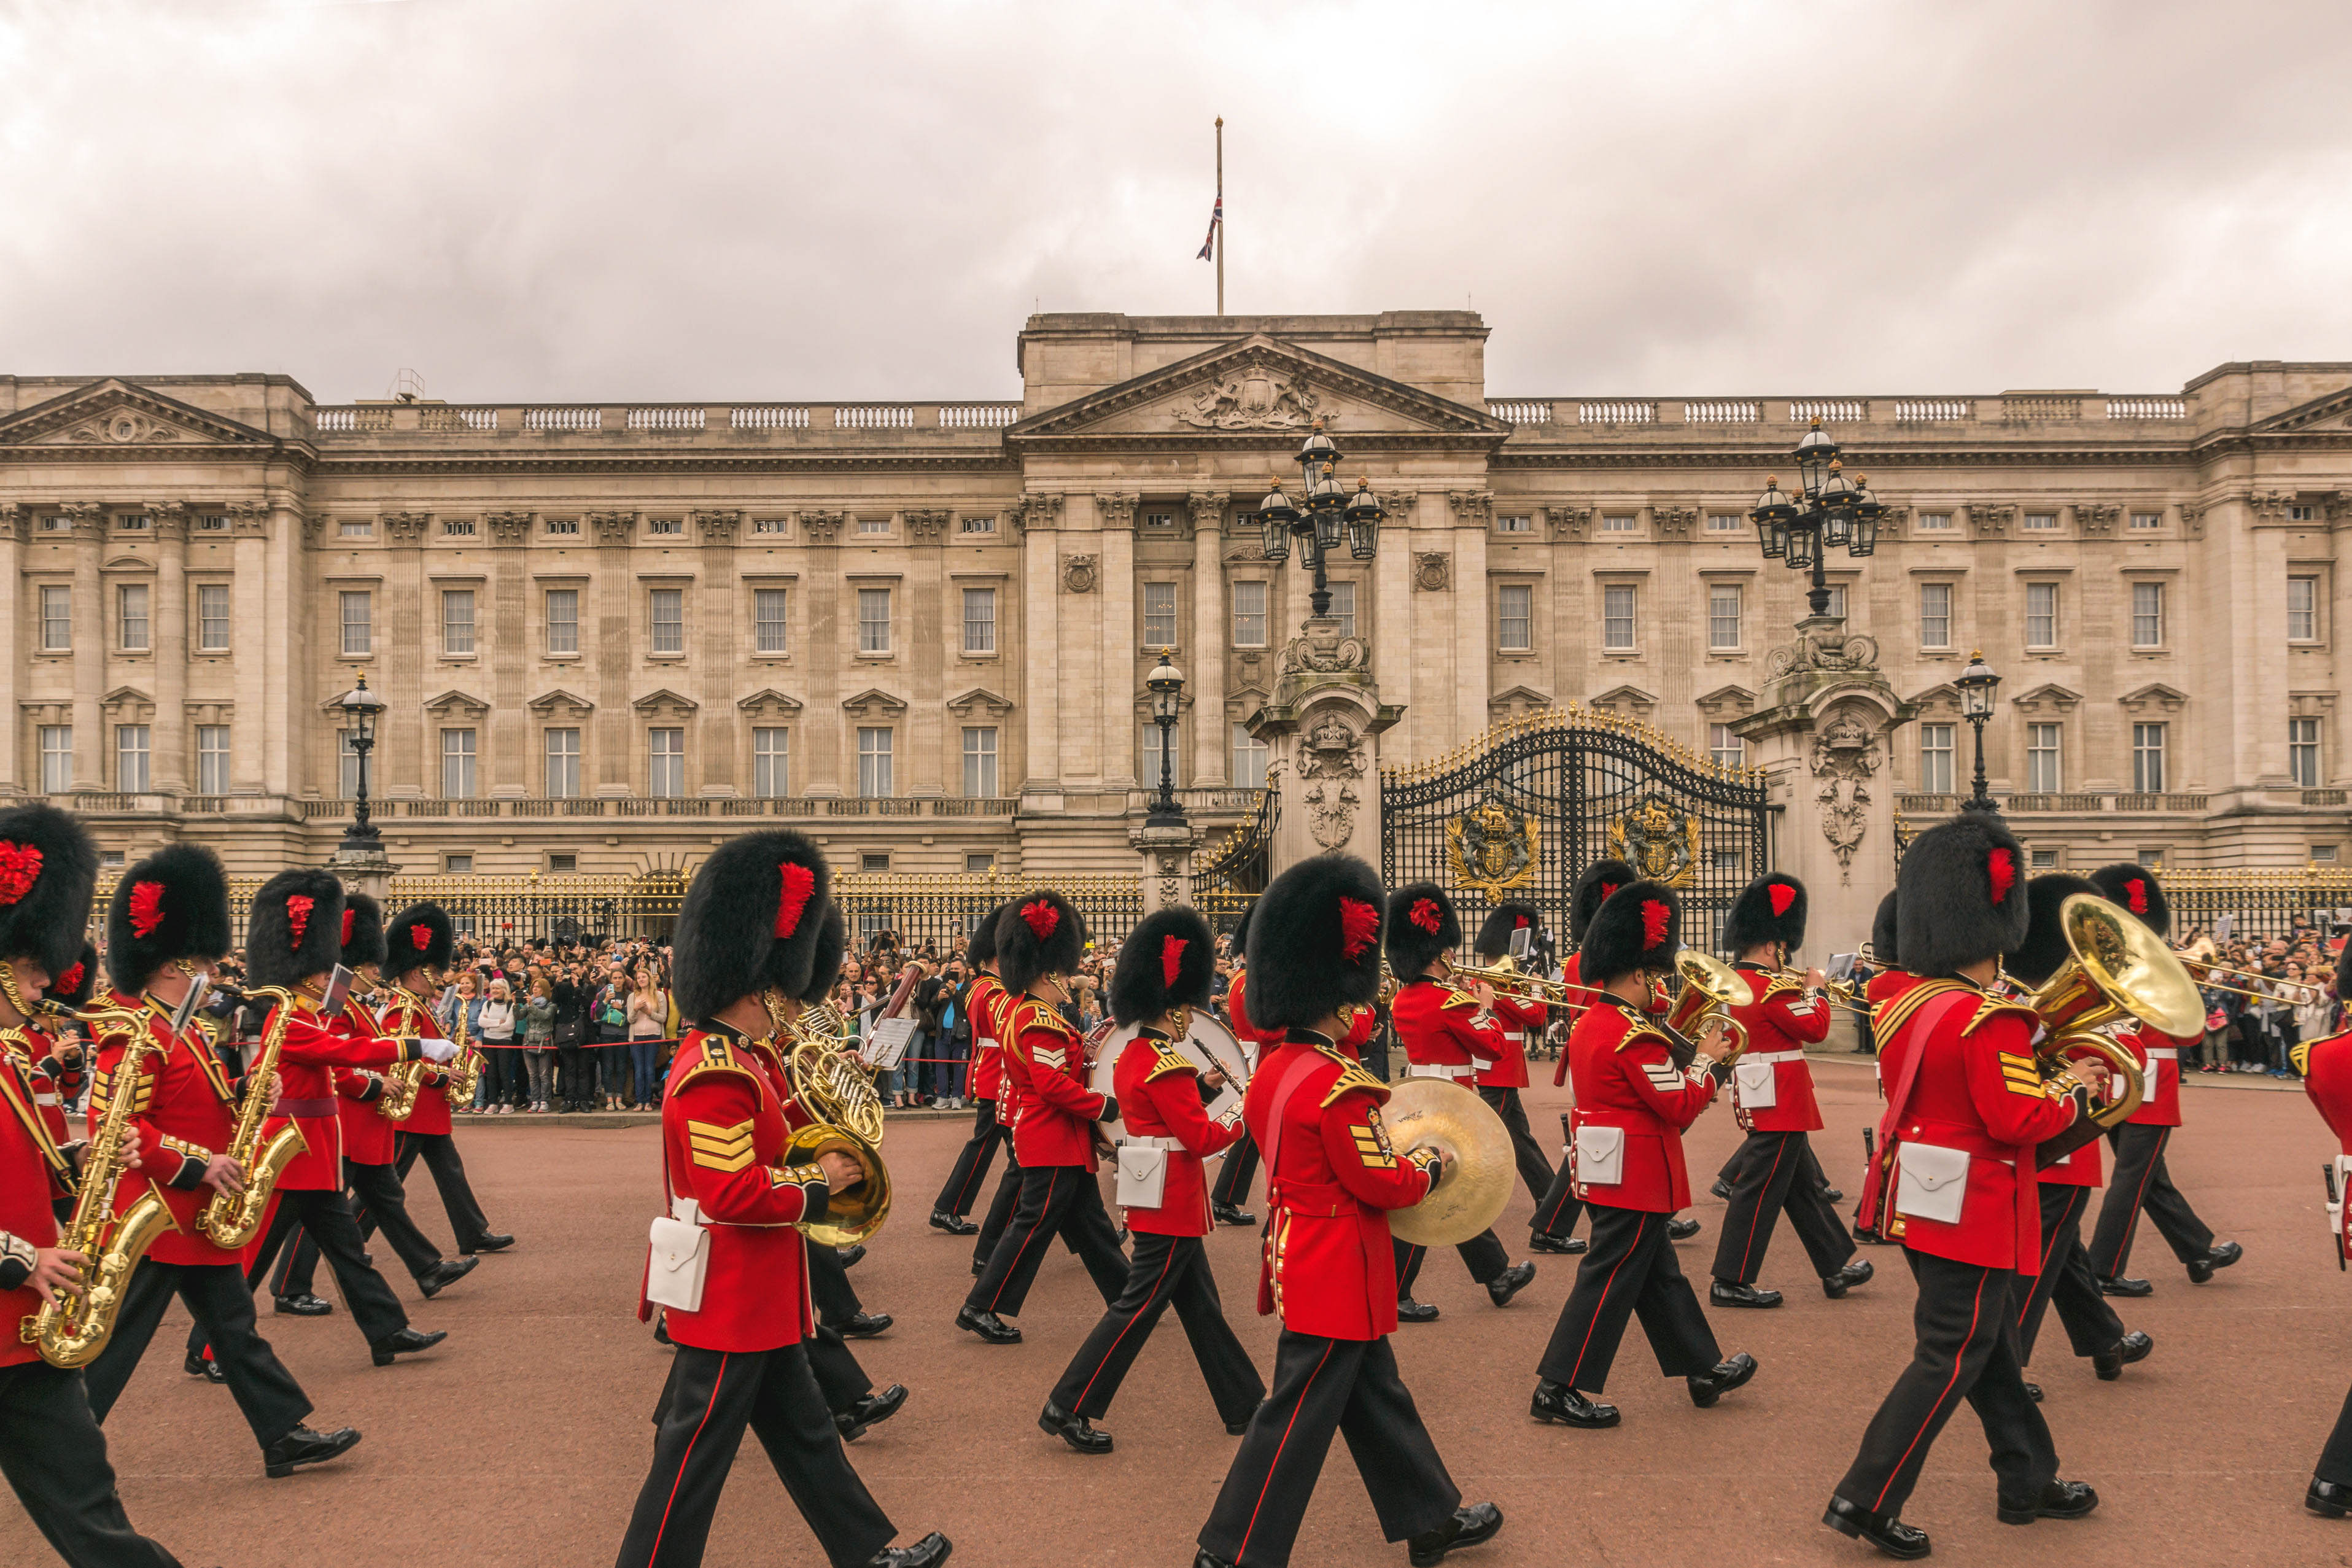 London buckingham palace guards guard changing royal england june grea perform british